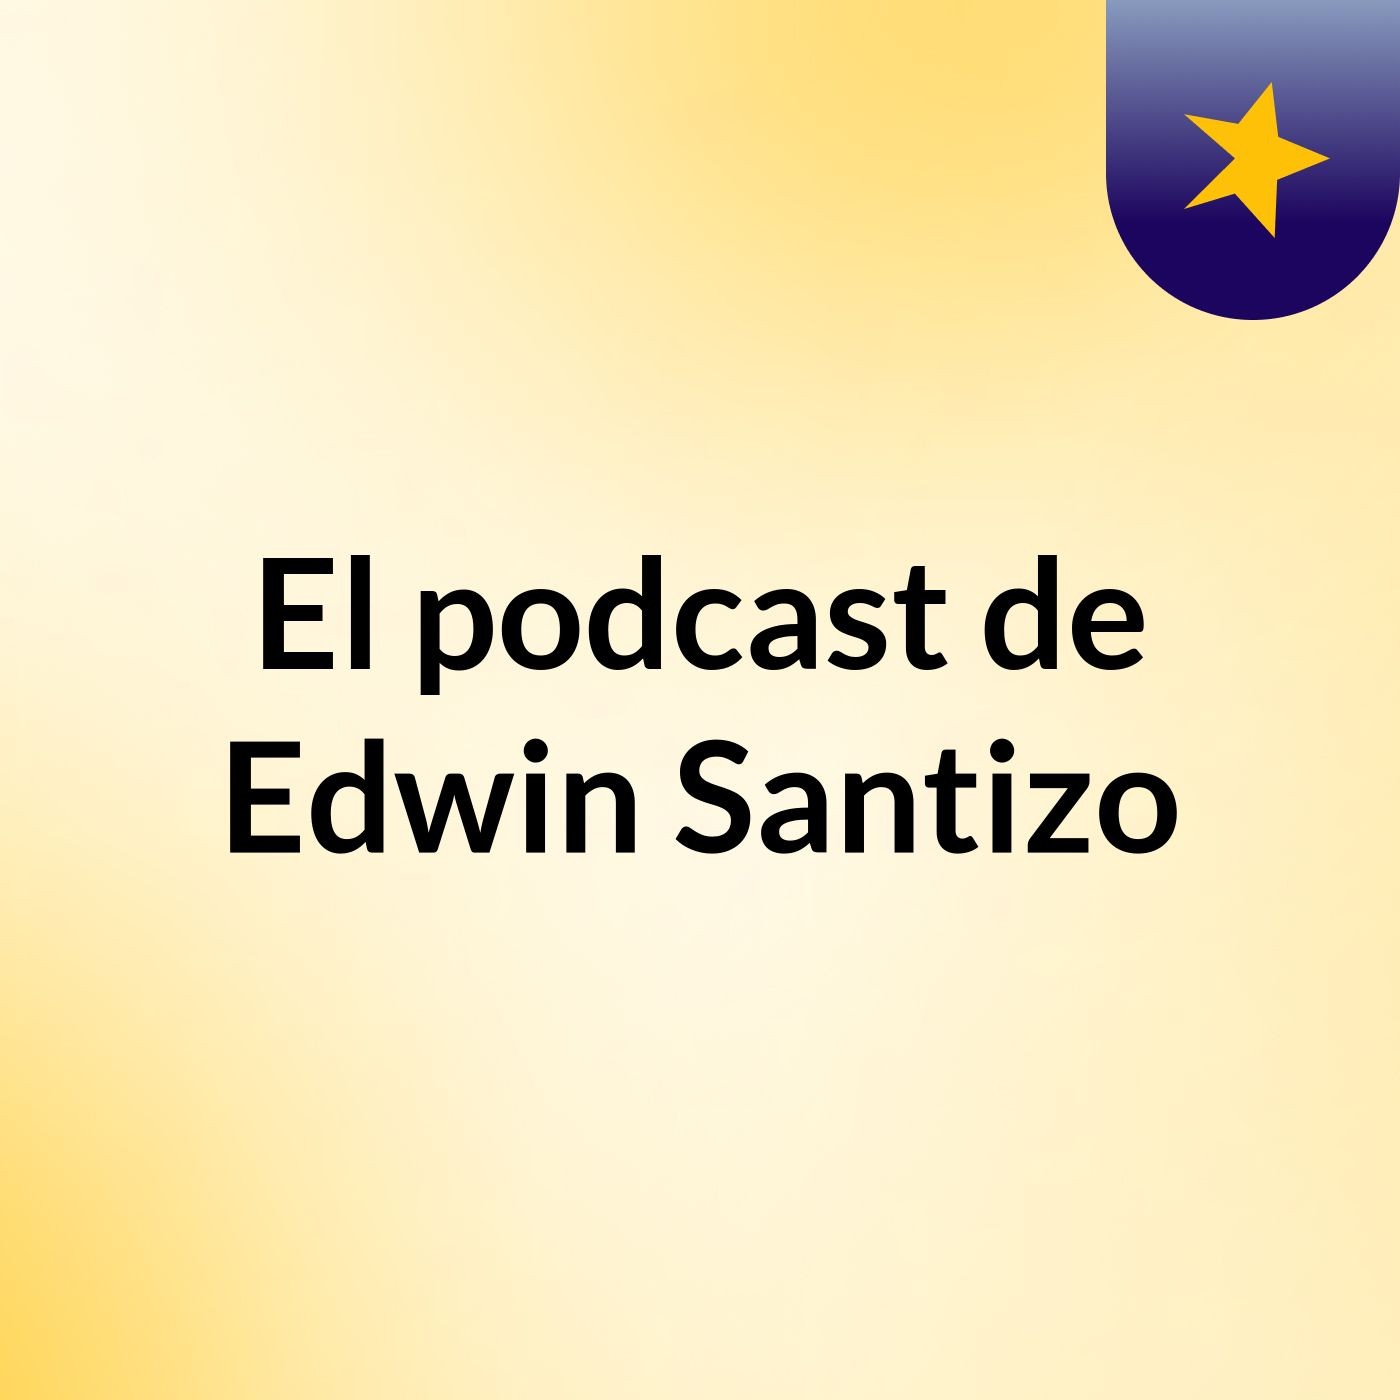 El podcast de Edwin Santizo